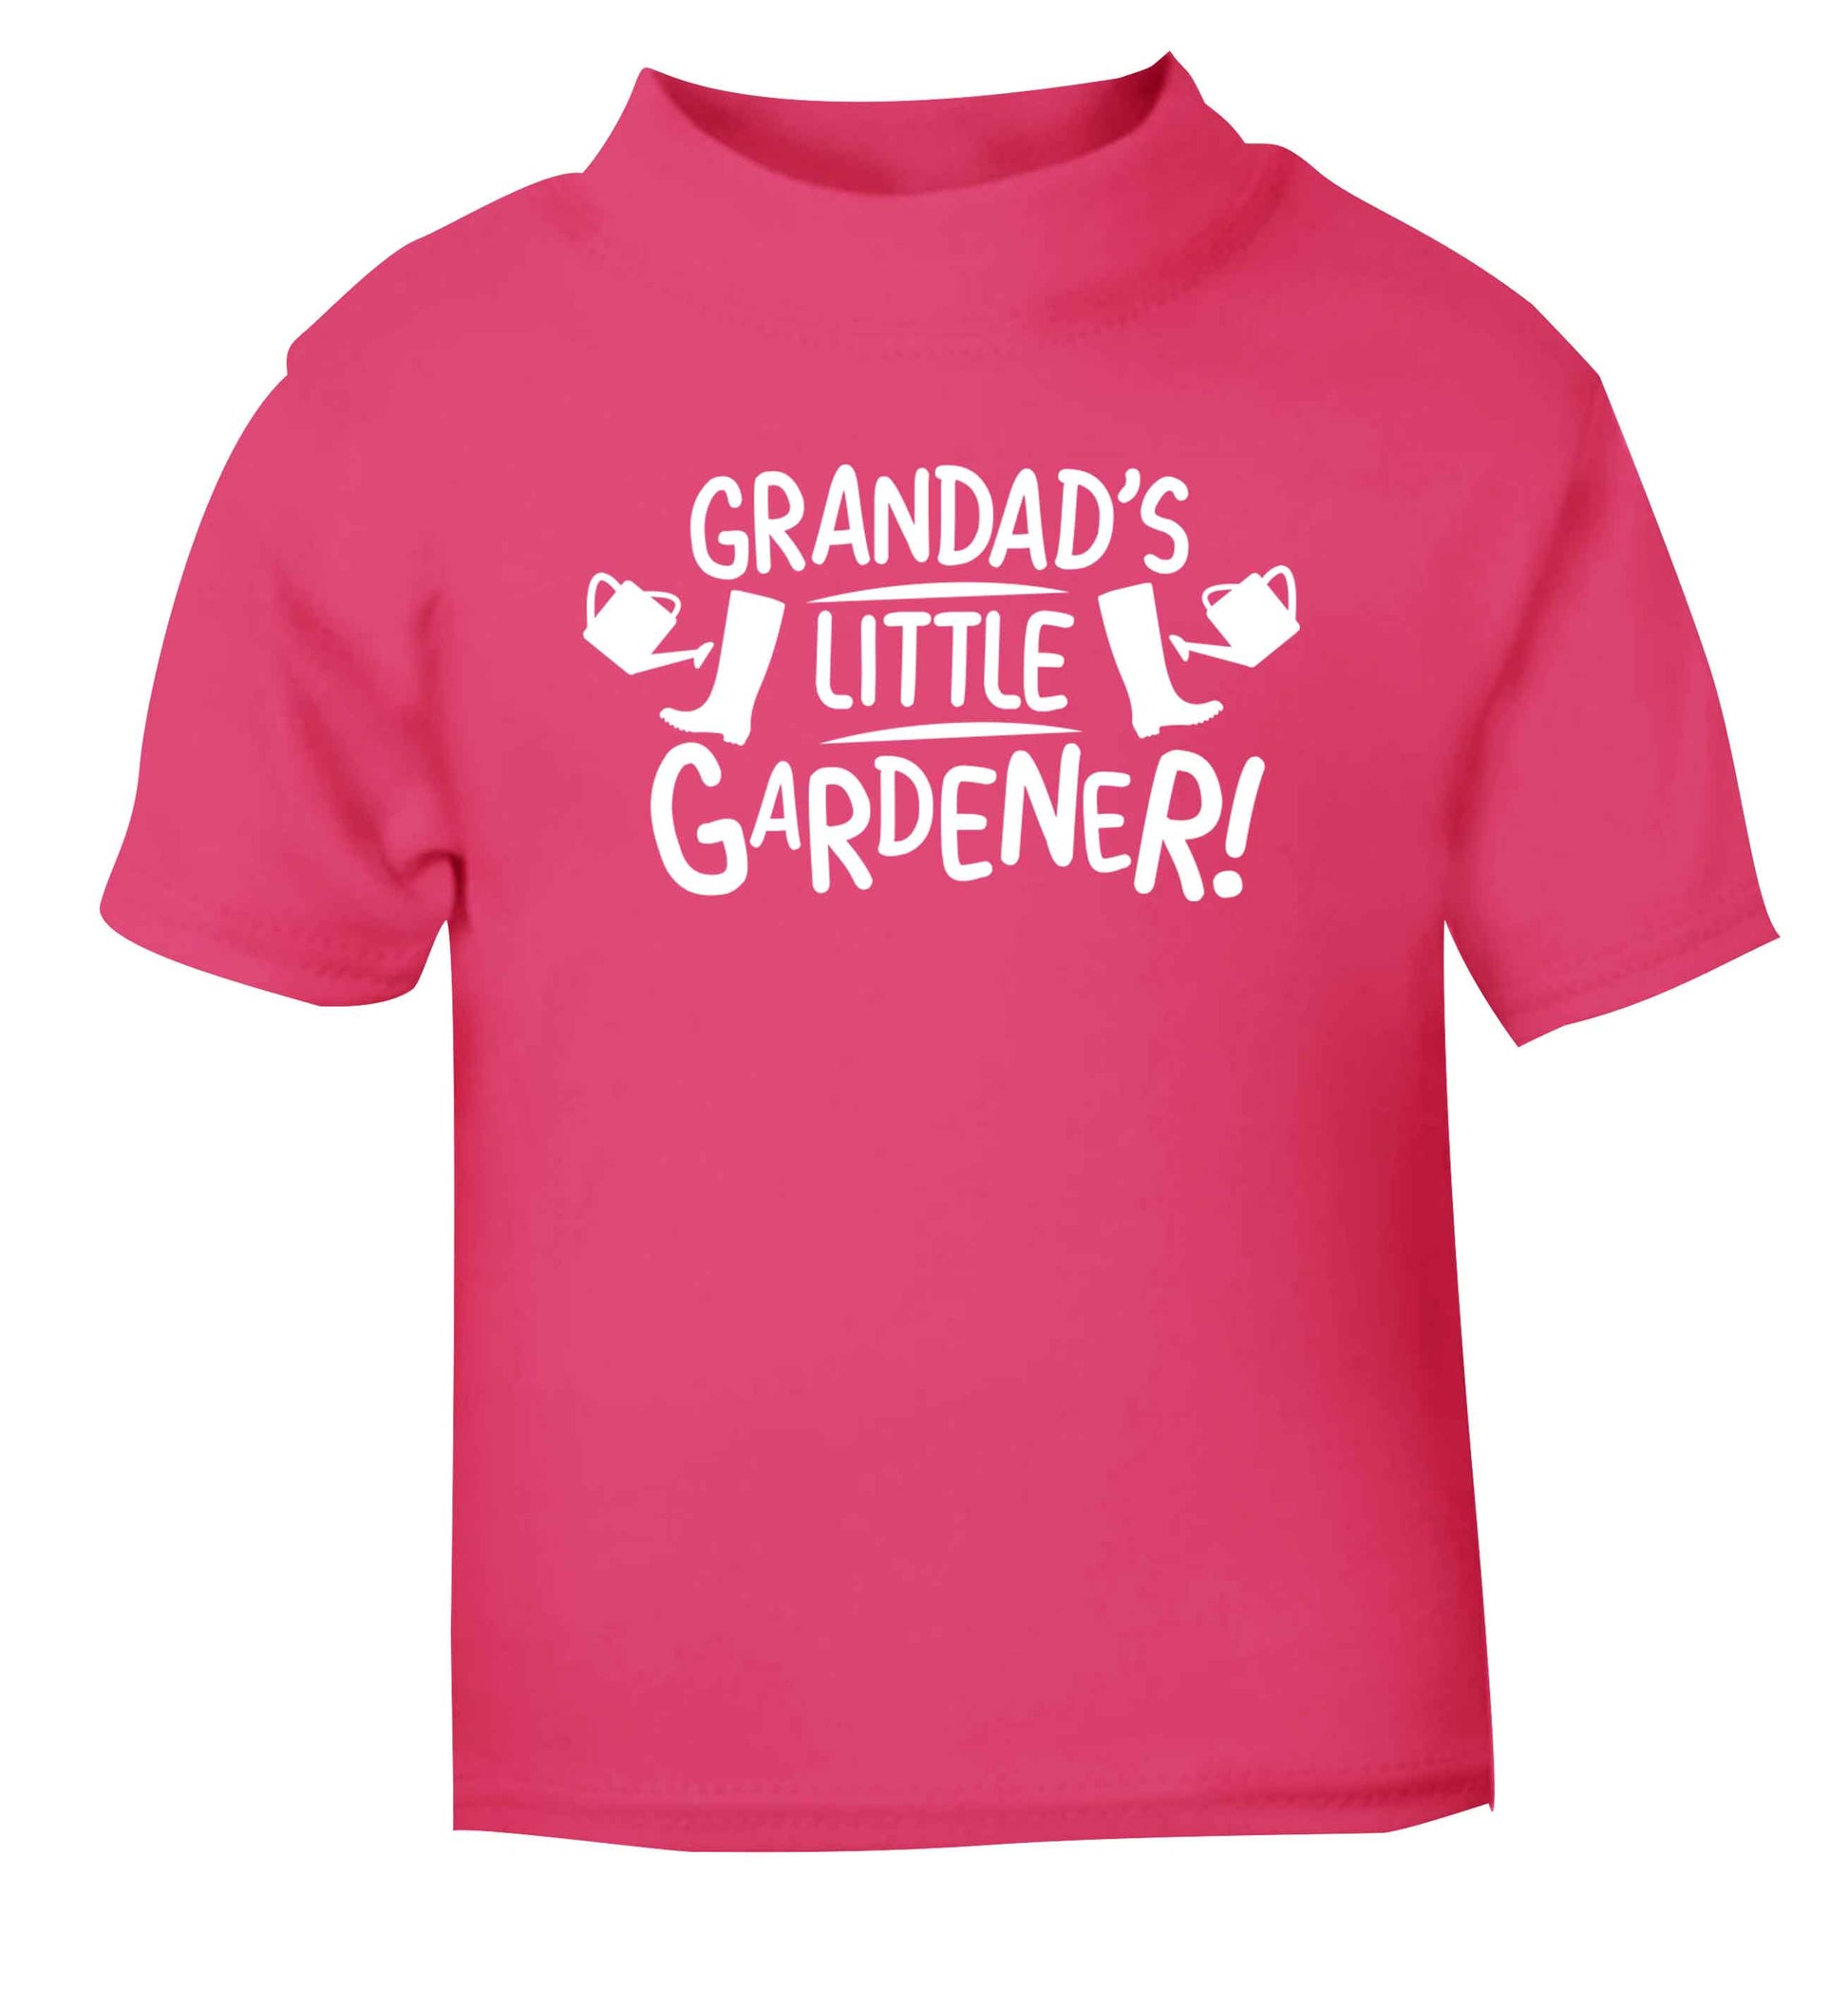 Grandad's little gardener pink Baby Toddler Tshirt 2 Years